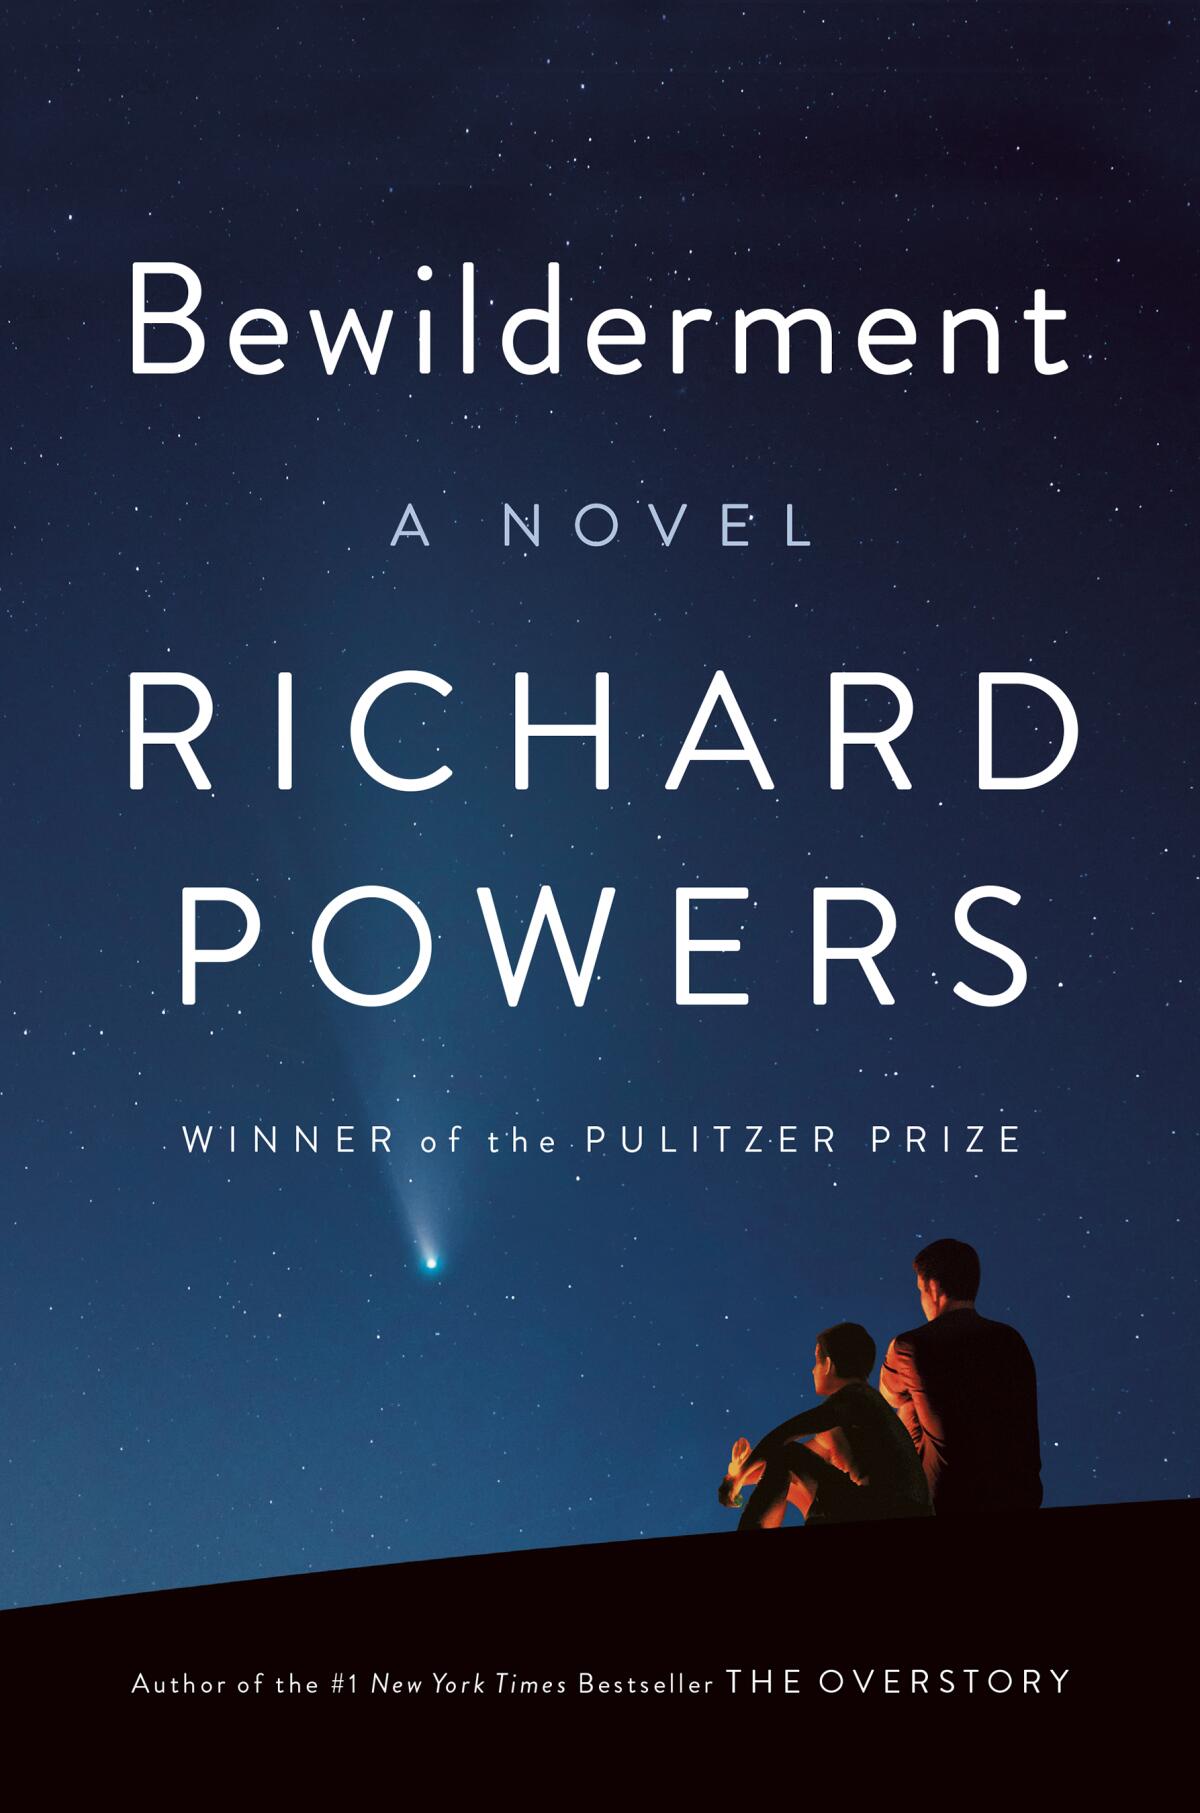 The cover for Richard Powers' novel, "Bewilderment."